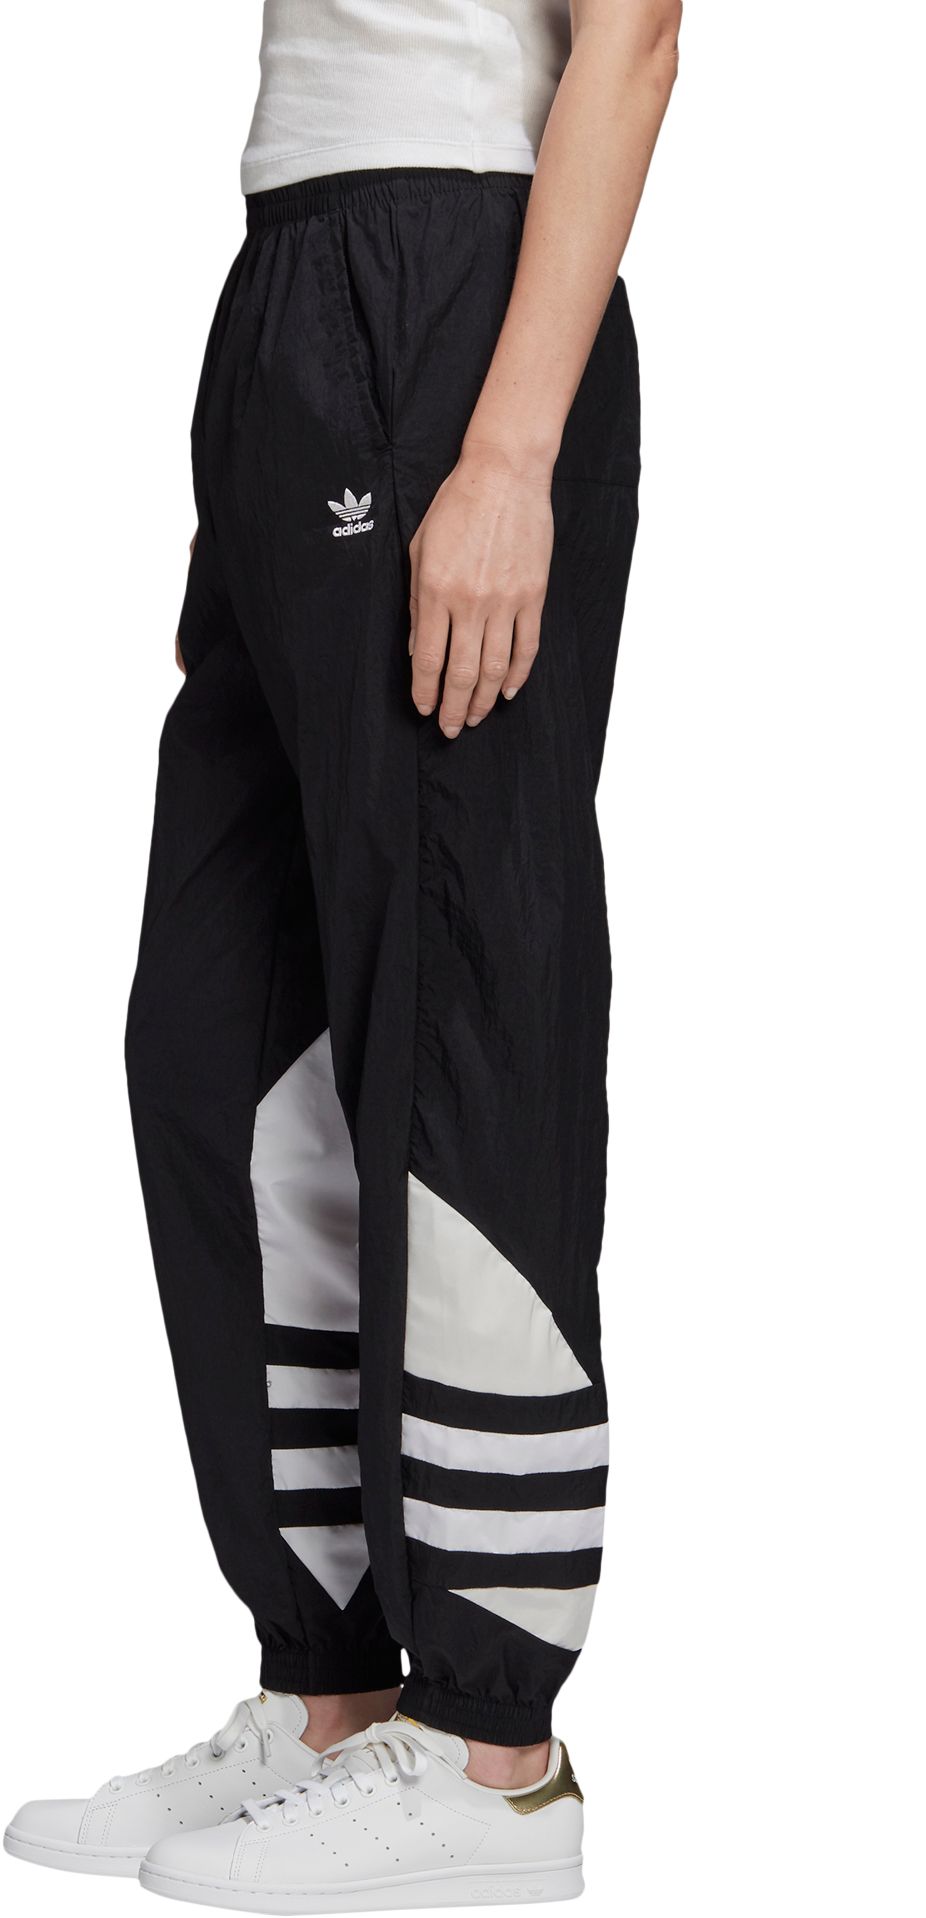 adidas women's large logo track pants